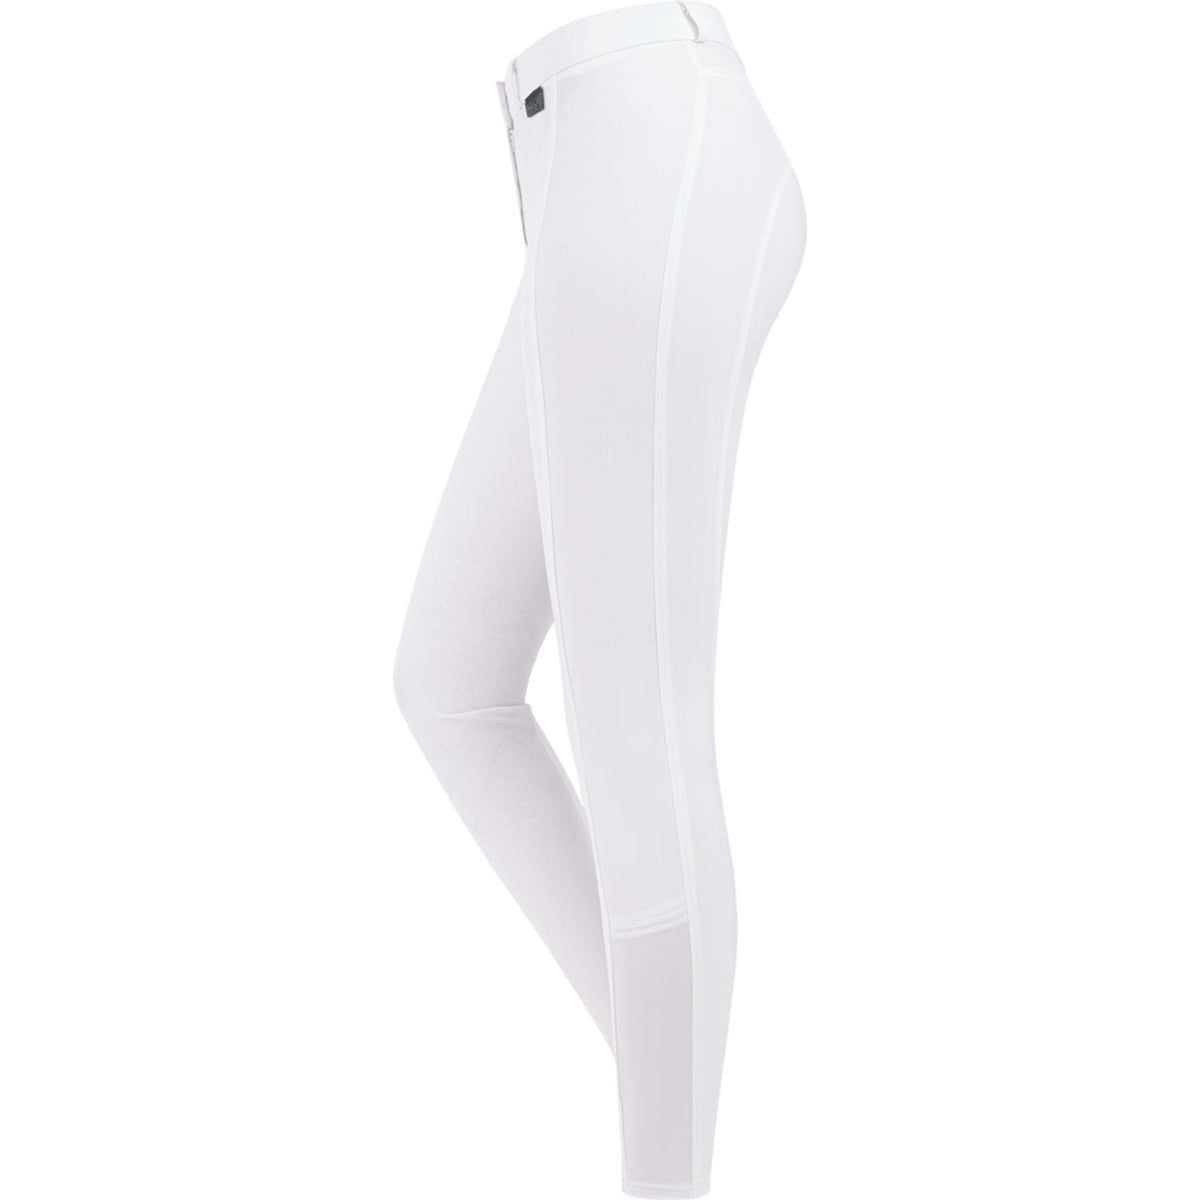 ELT Reithose Micro Silikon Kniebesatz Weiß